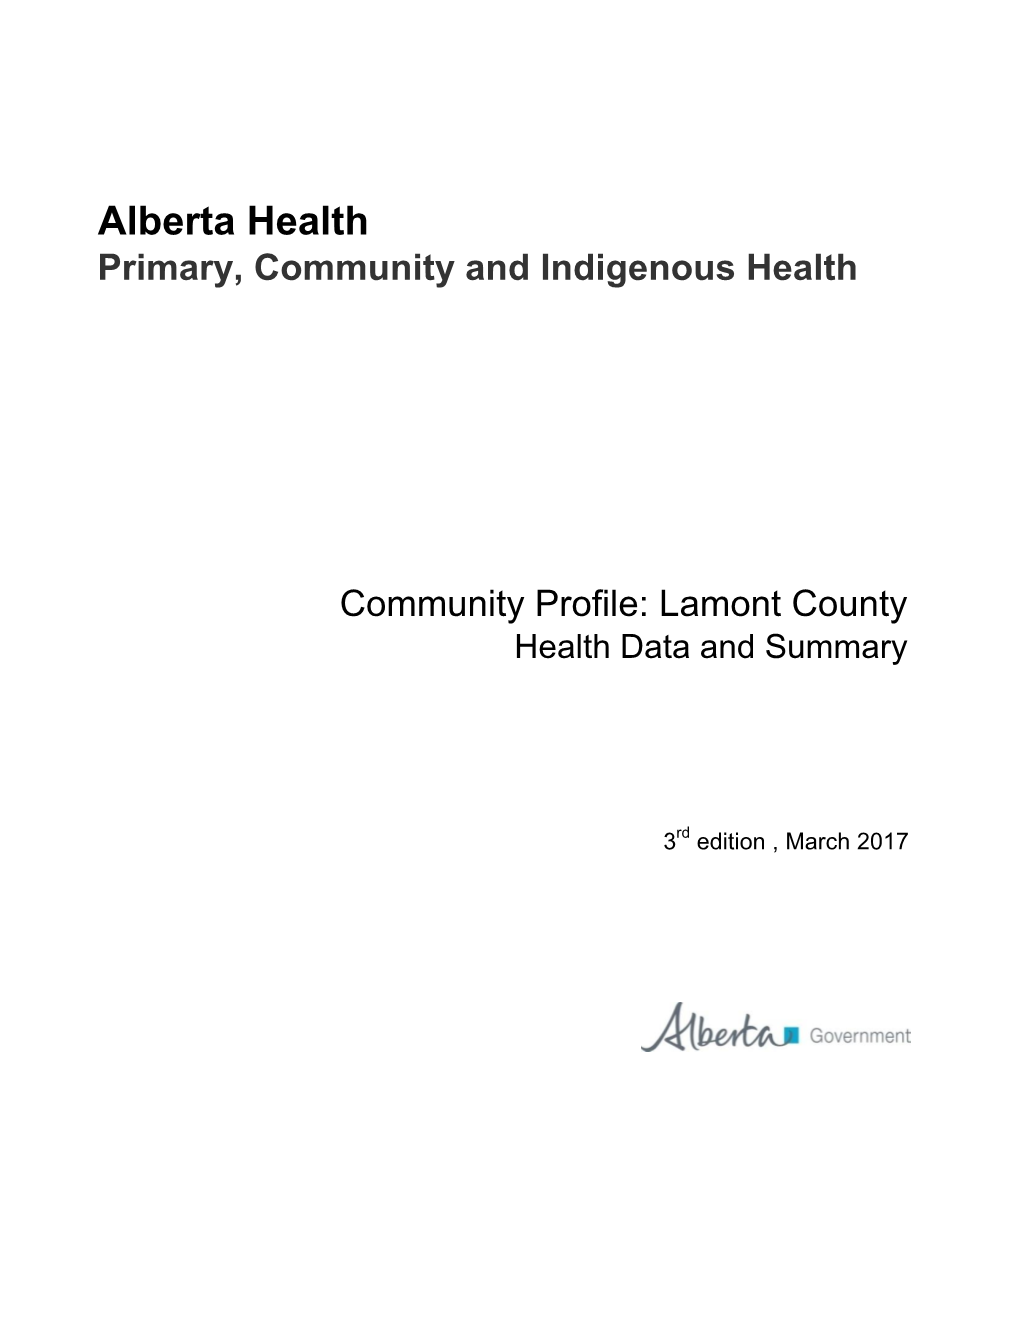 Lamont County Health Data and Summary